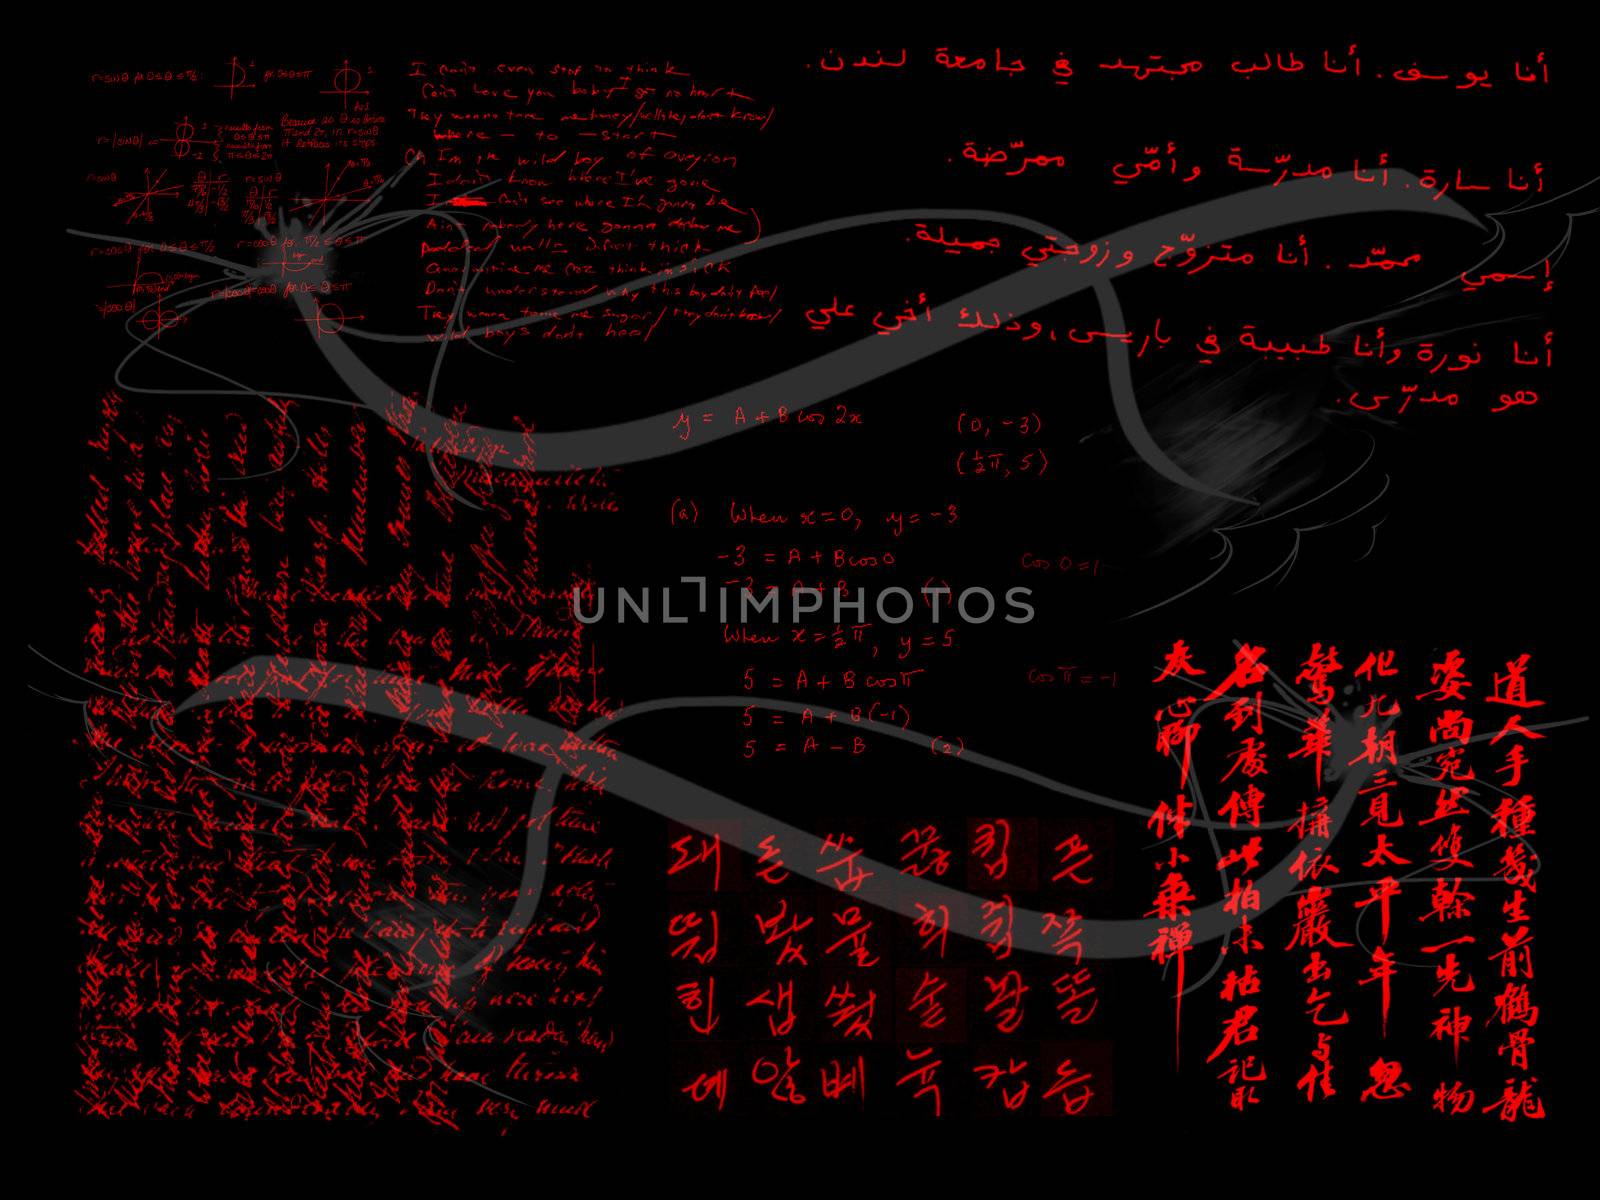 Various Handwriting Samples in Red on Black by bobbigmac